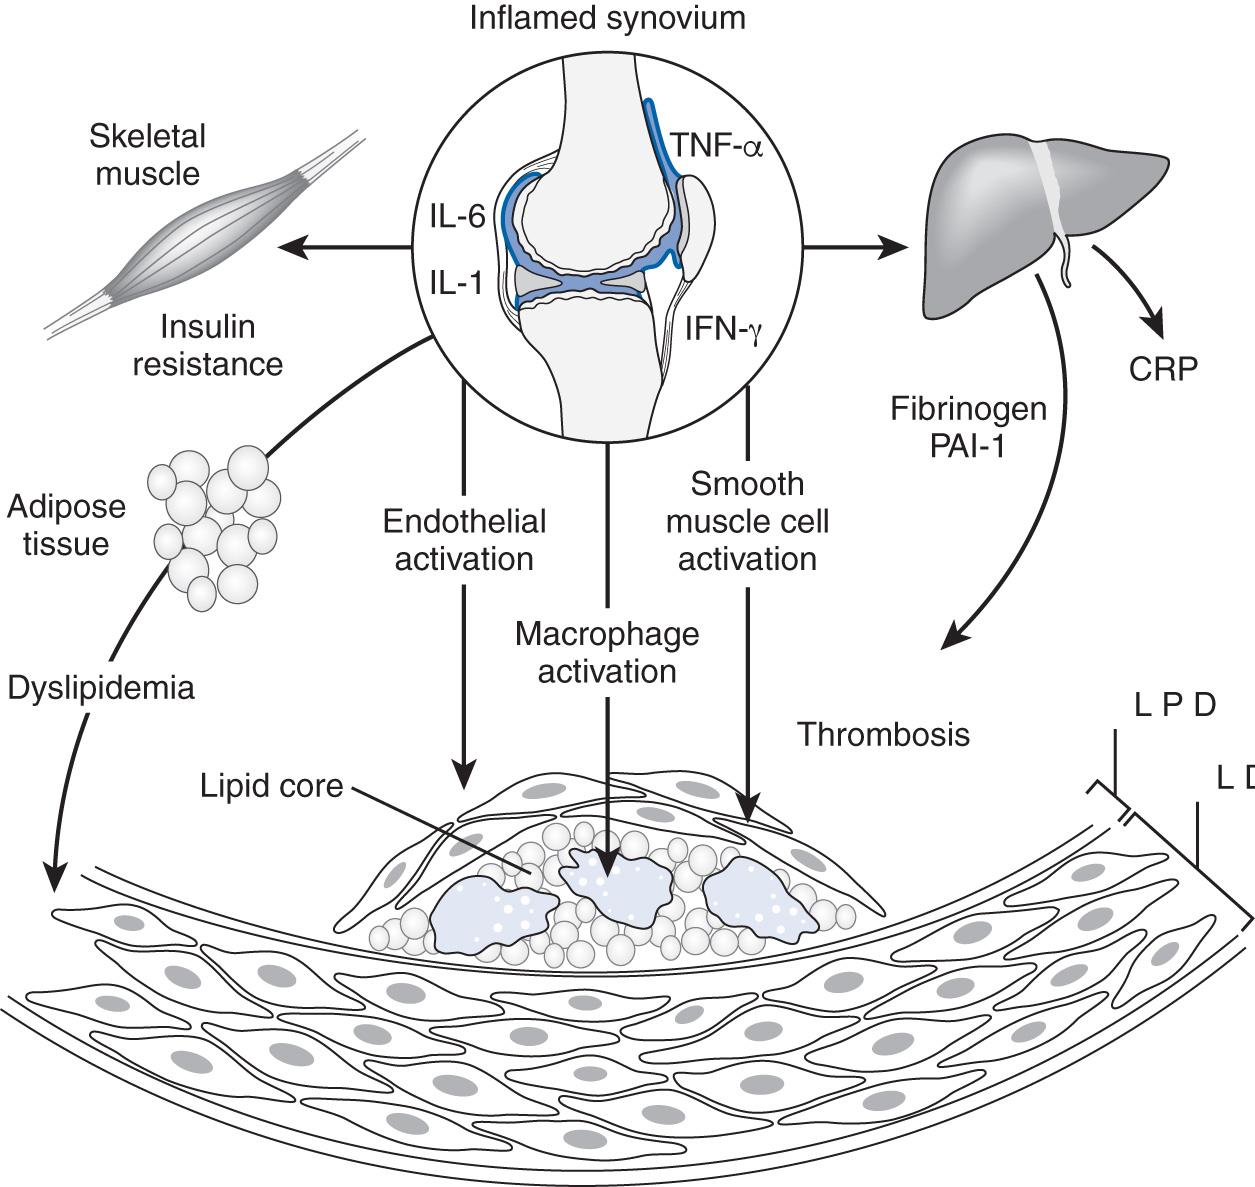 Fig. 47.1, Proposed mechanisms of accelerated atherosclerosis in patients with rheumatoid arthritis. CRP, C-reactive protein; IFN, interferon; IL, interleukin; PAI, plasminogen activator inhibitor; TNF, tumor necrosis factor.